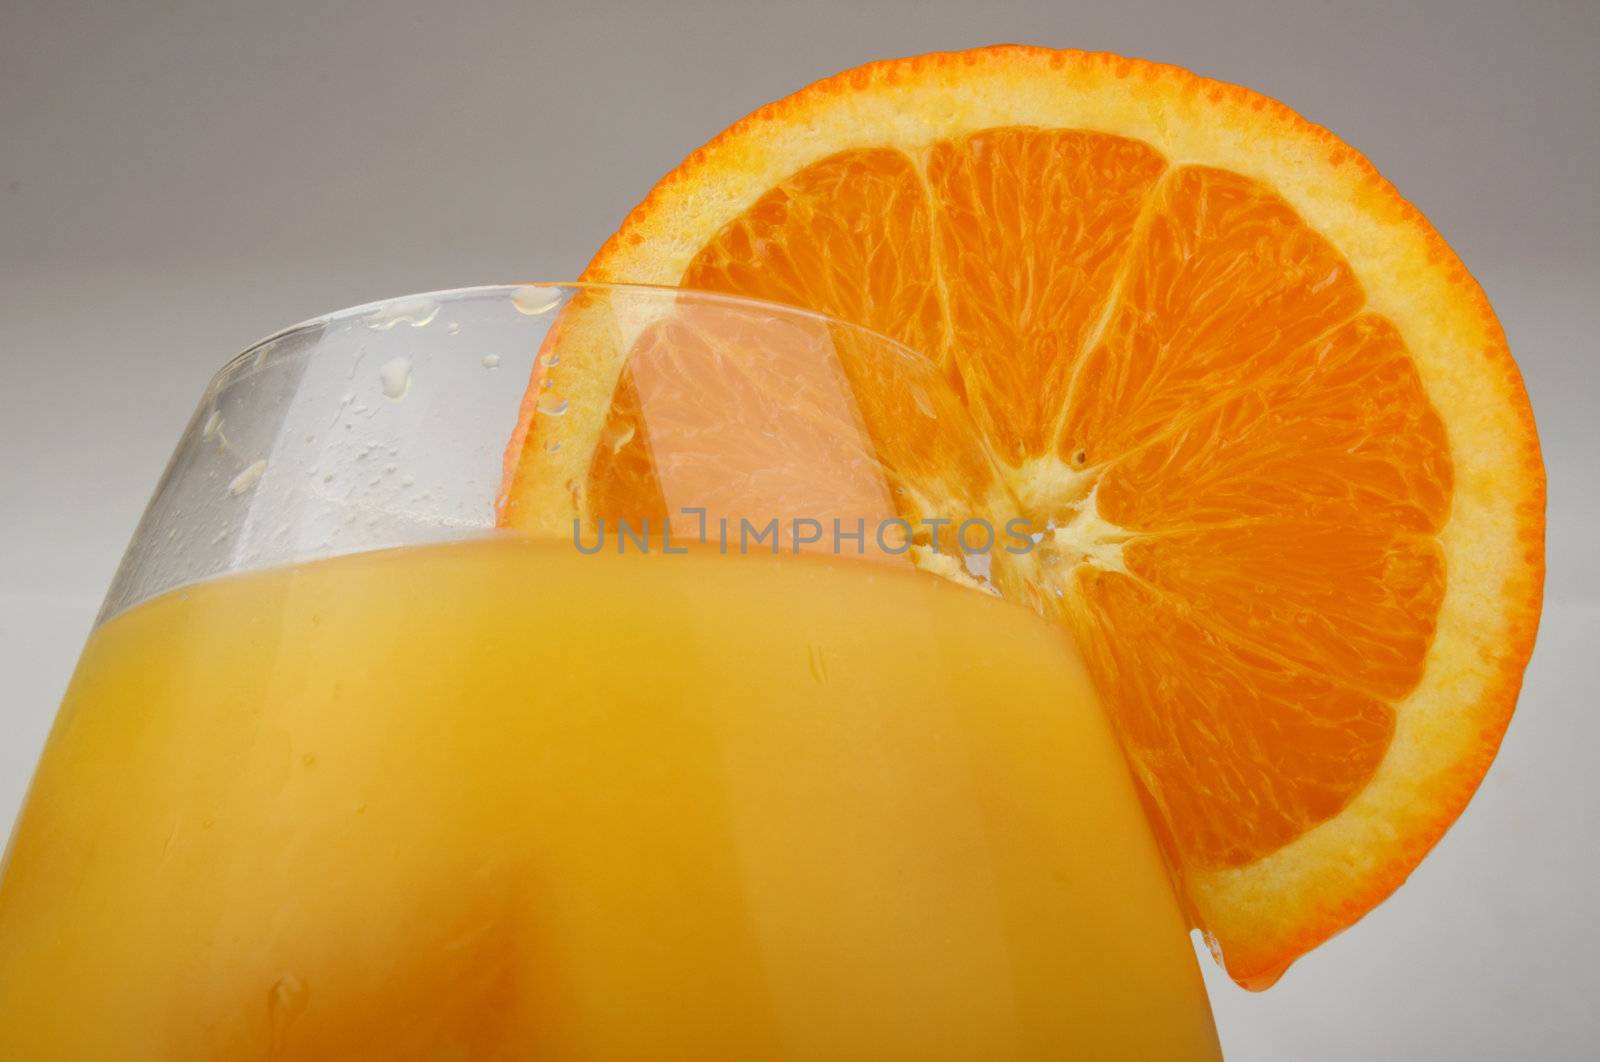 Glass of fresh orange juice with an orange slice